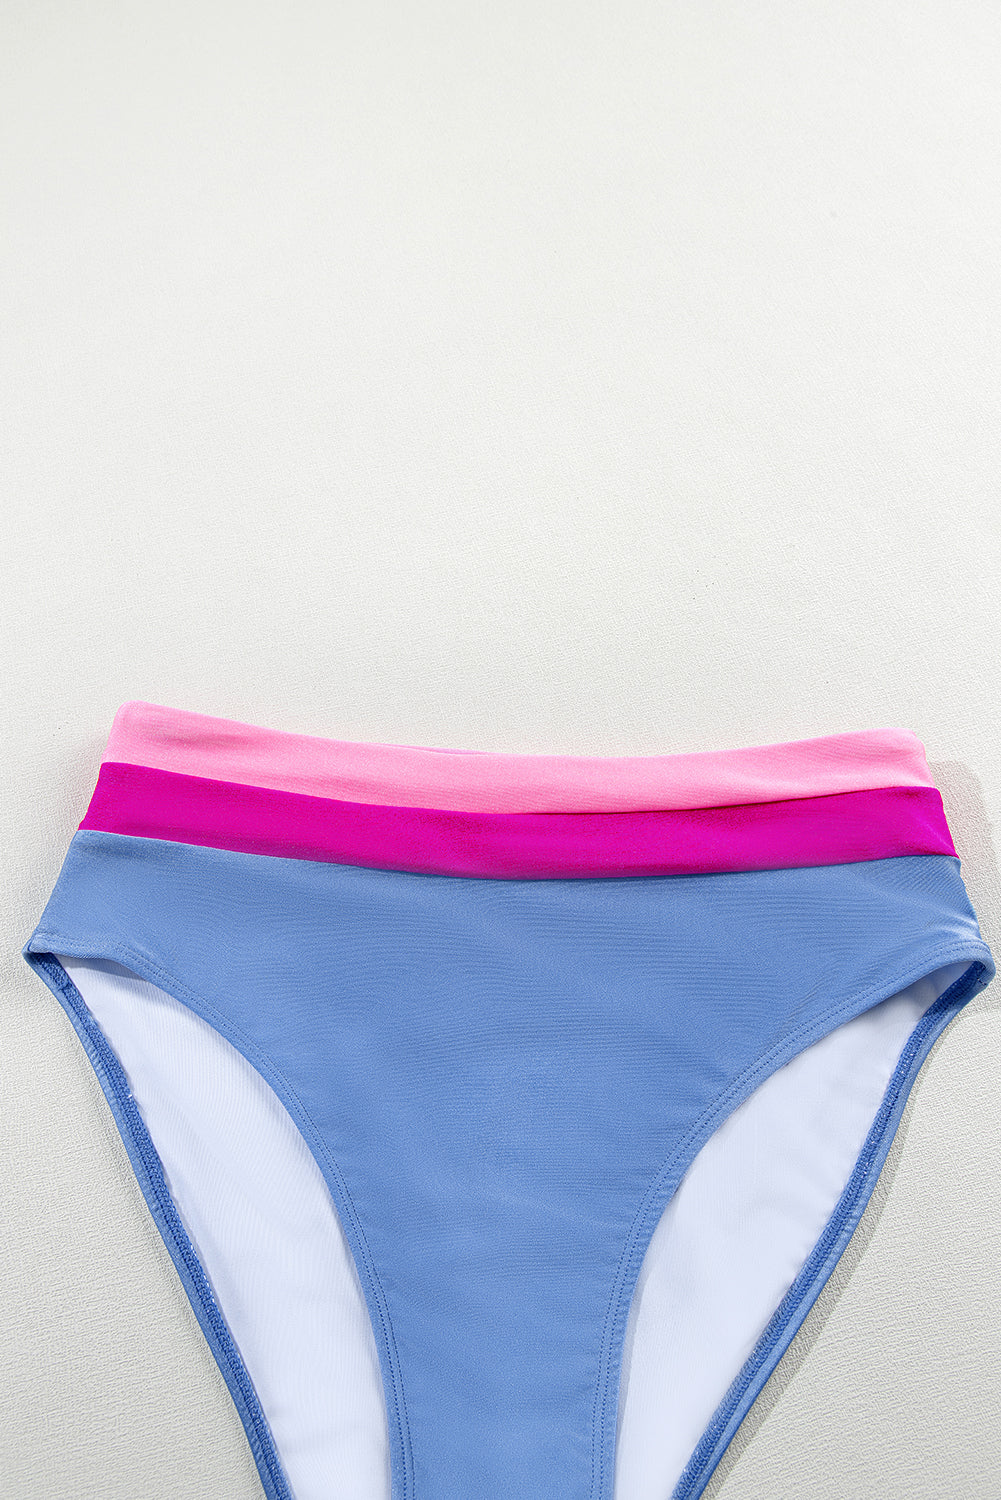 Hellblauer Colorblock-Bikini-Badeanzug mit hoher Taille